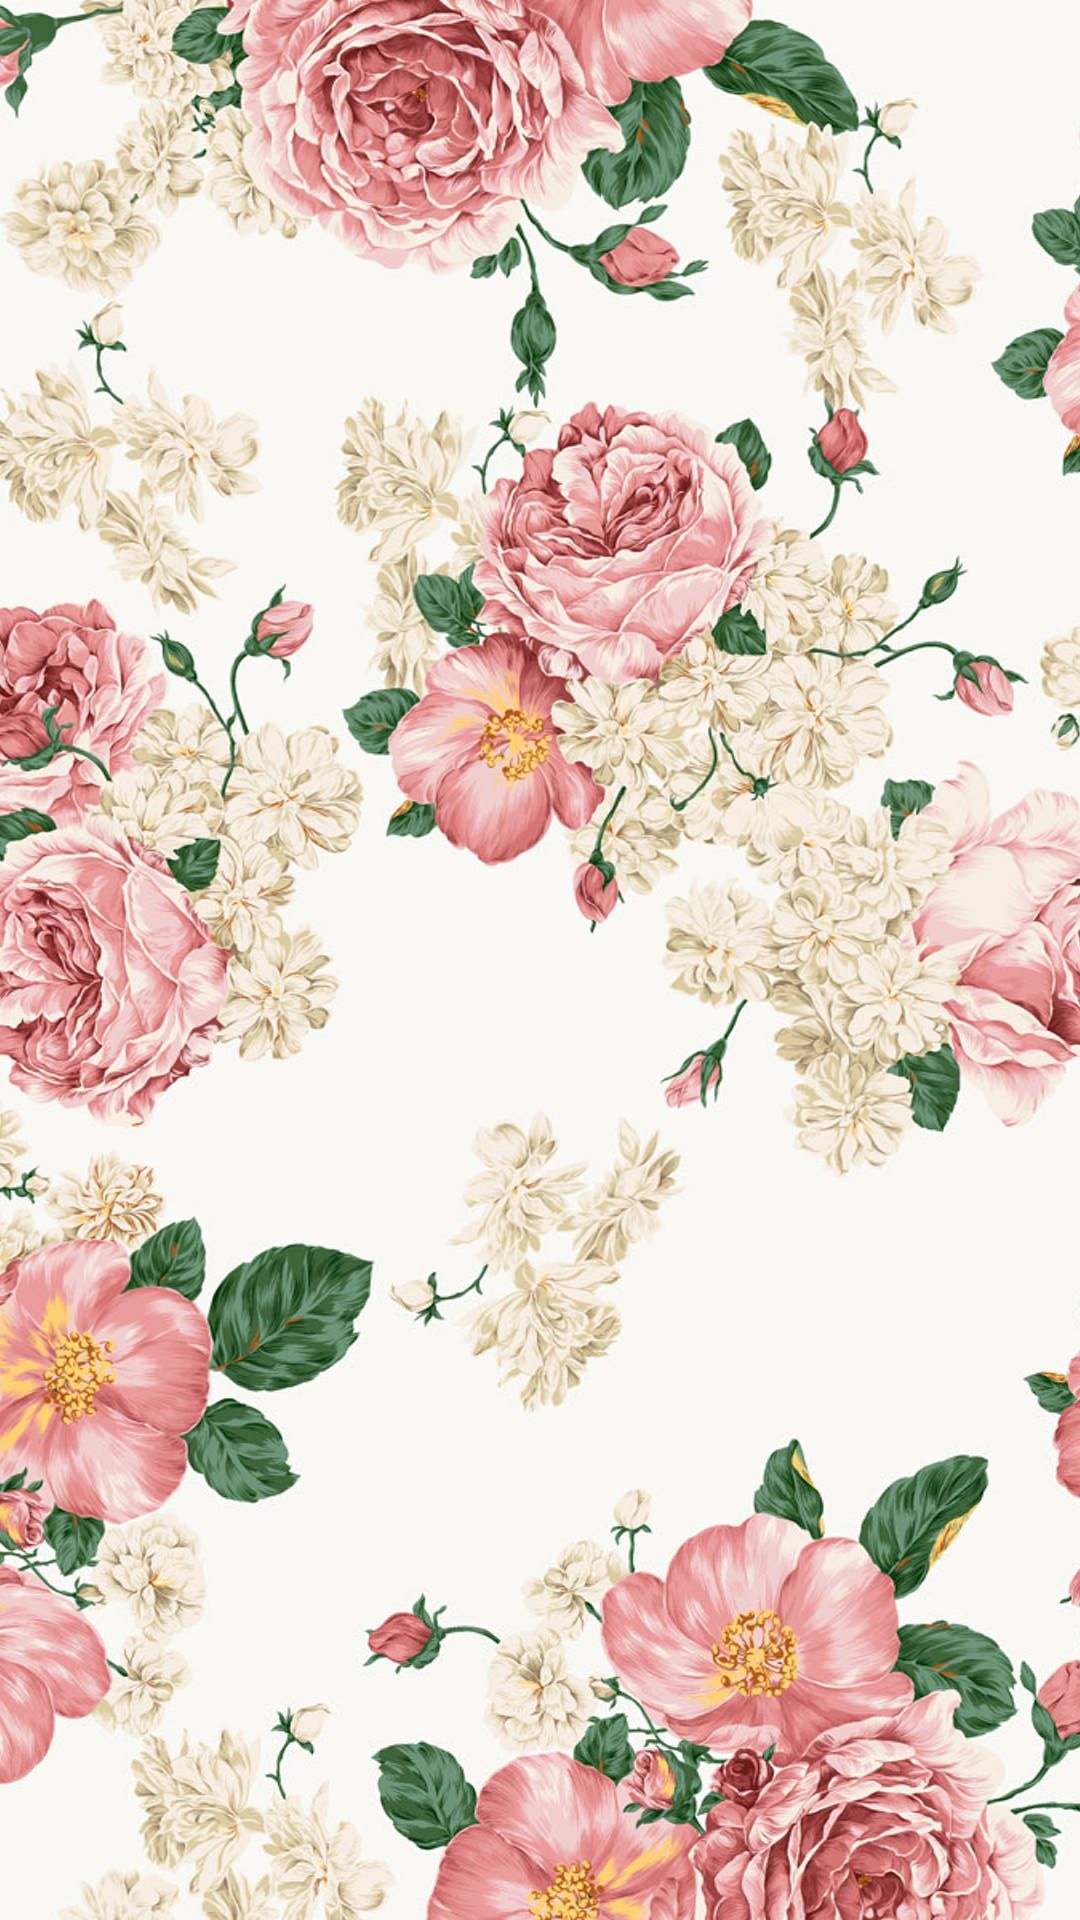 cath-kidston-background-floral-iphone-6-plus-1080x1920-wallpaper.jpg